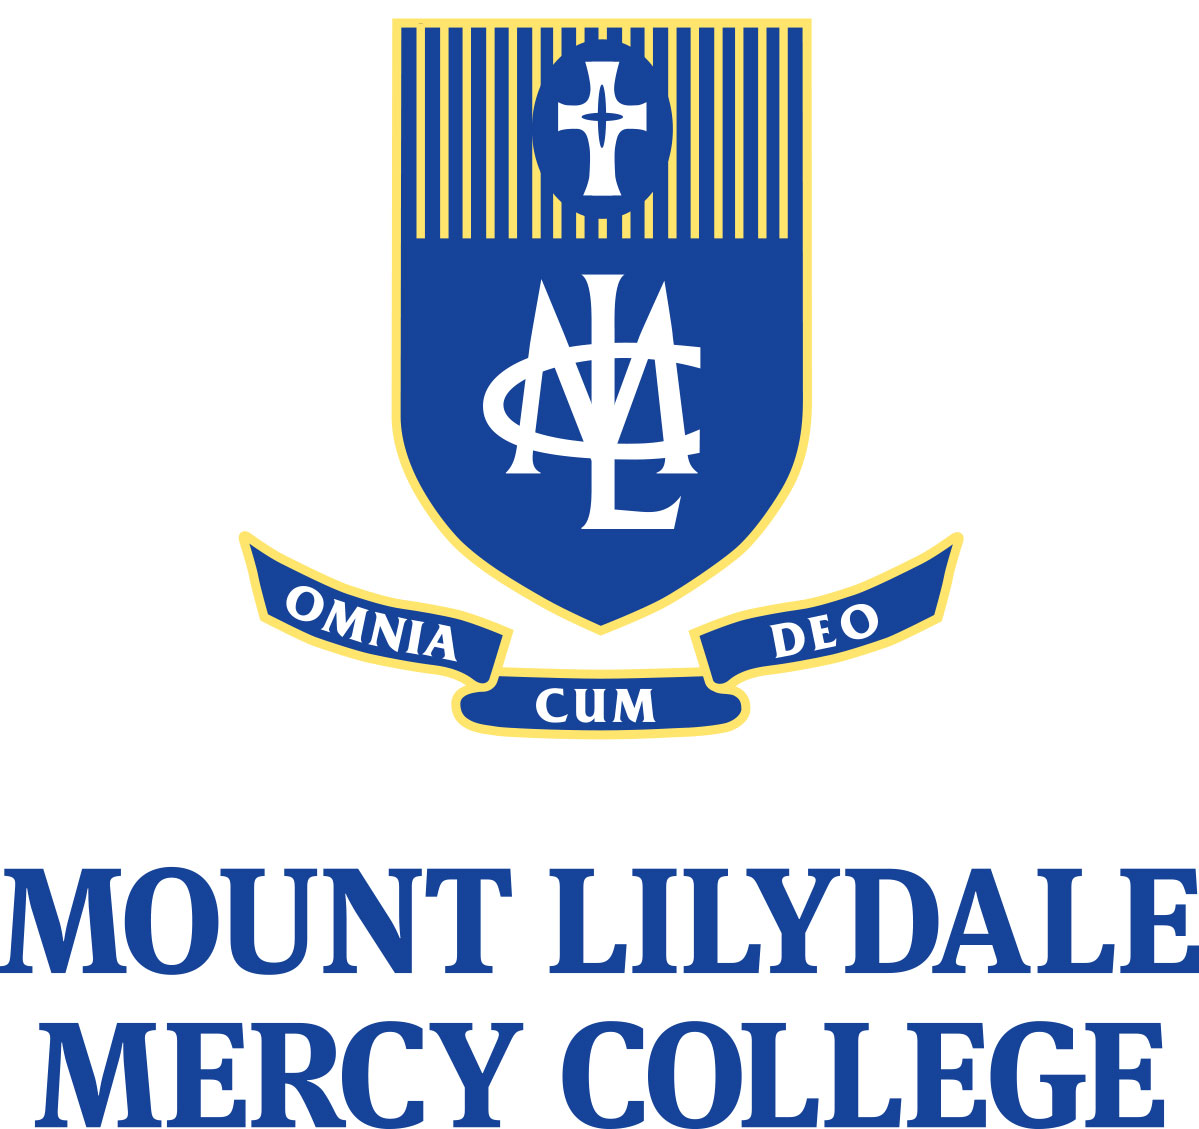 Mount Lilydale Mercy College